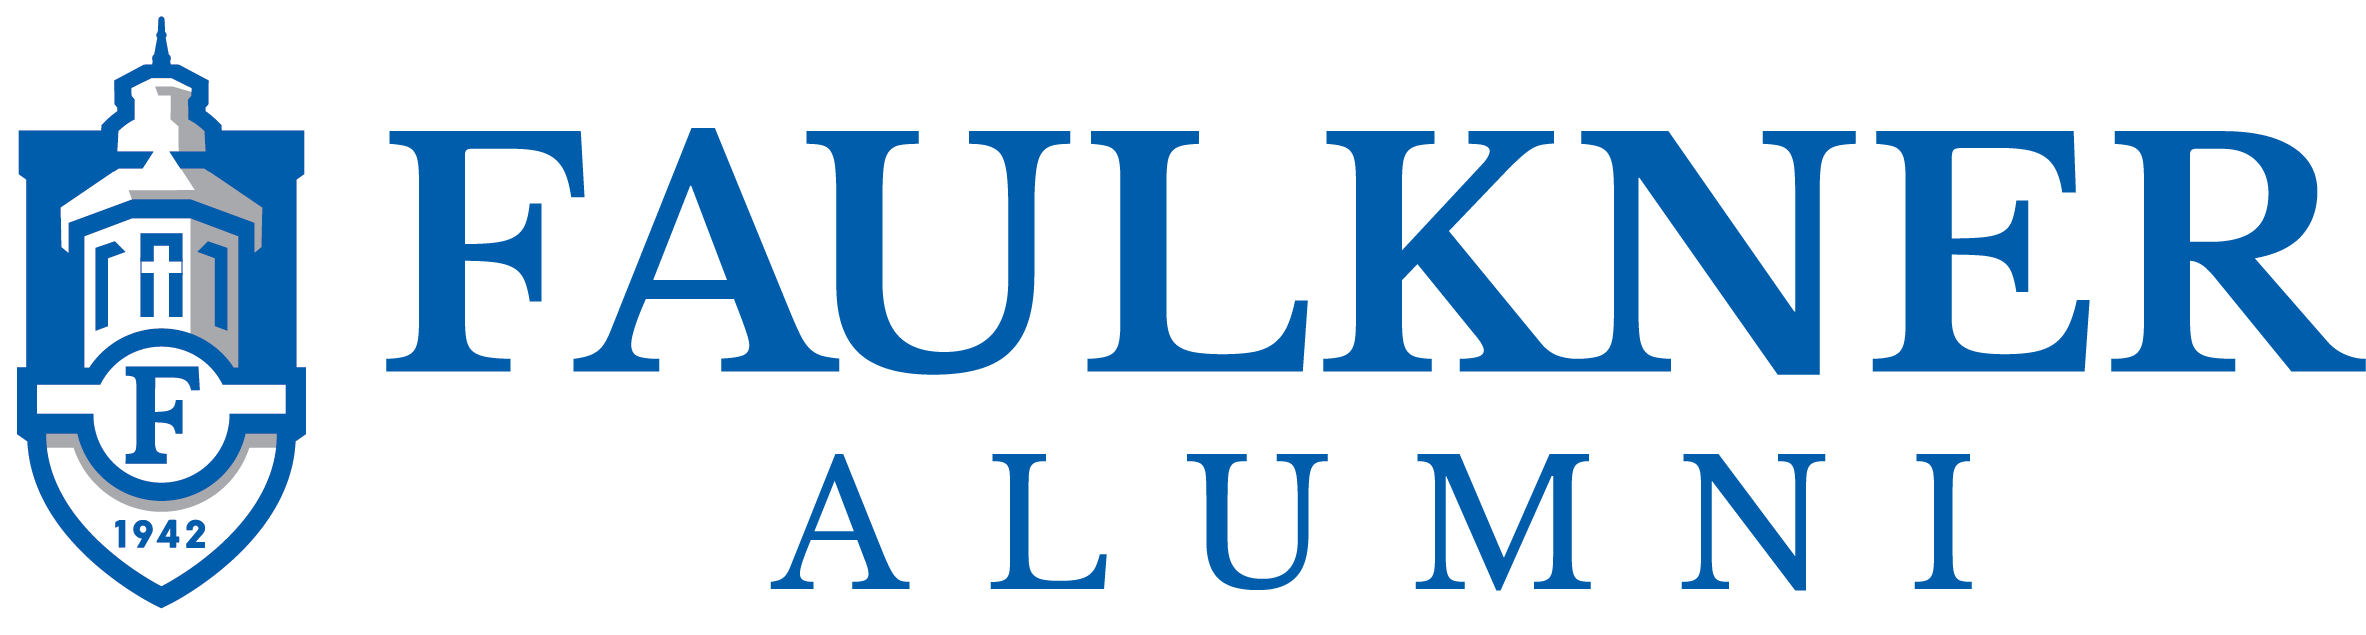 Faulkner Alumni Logo